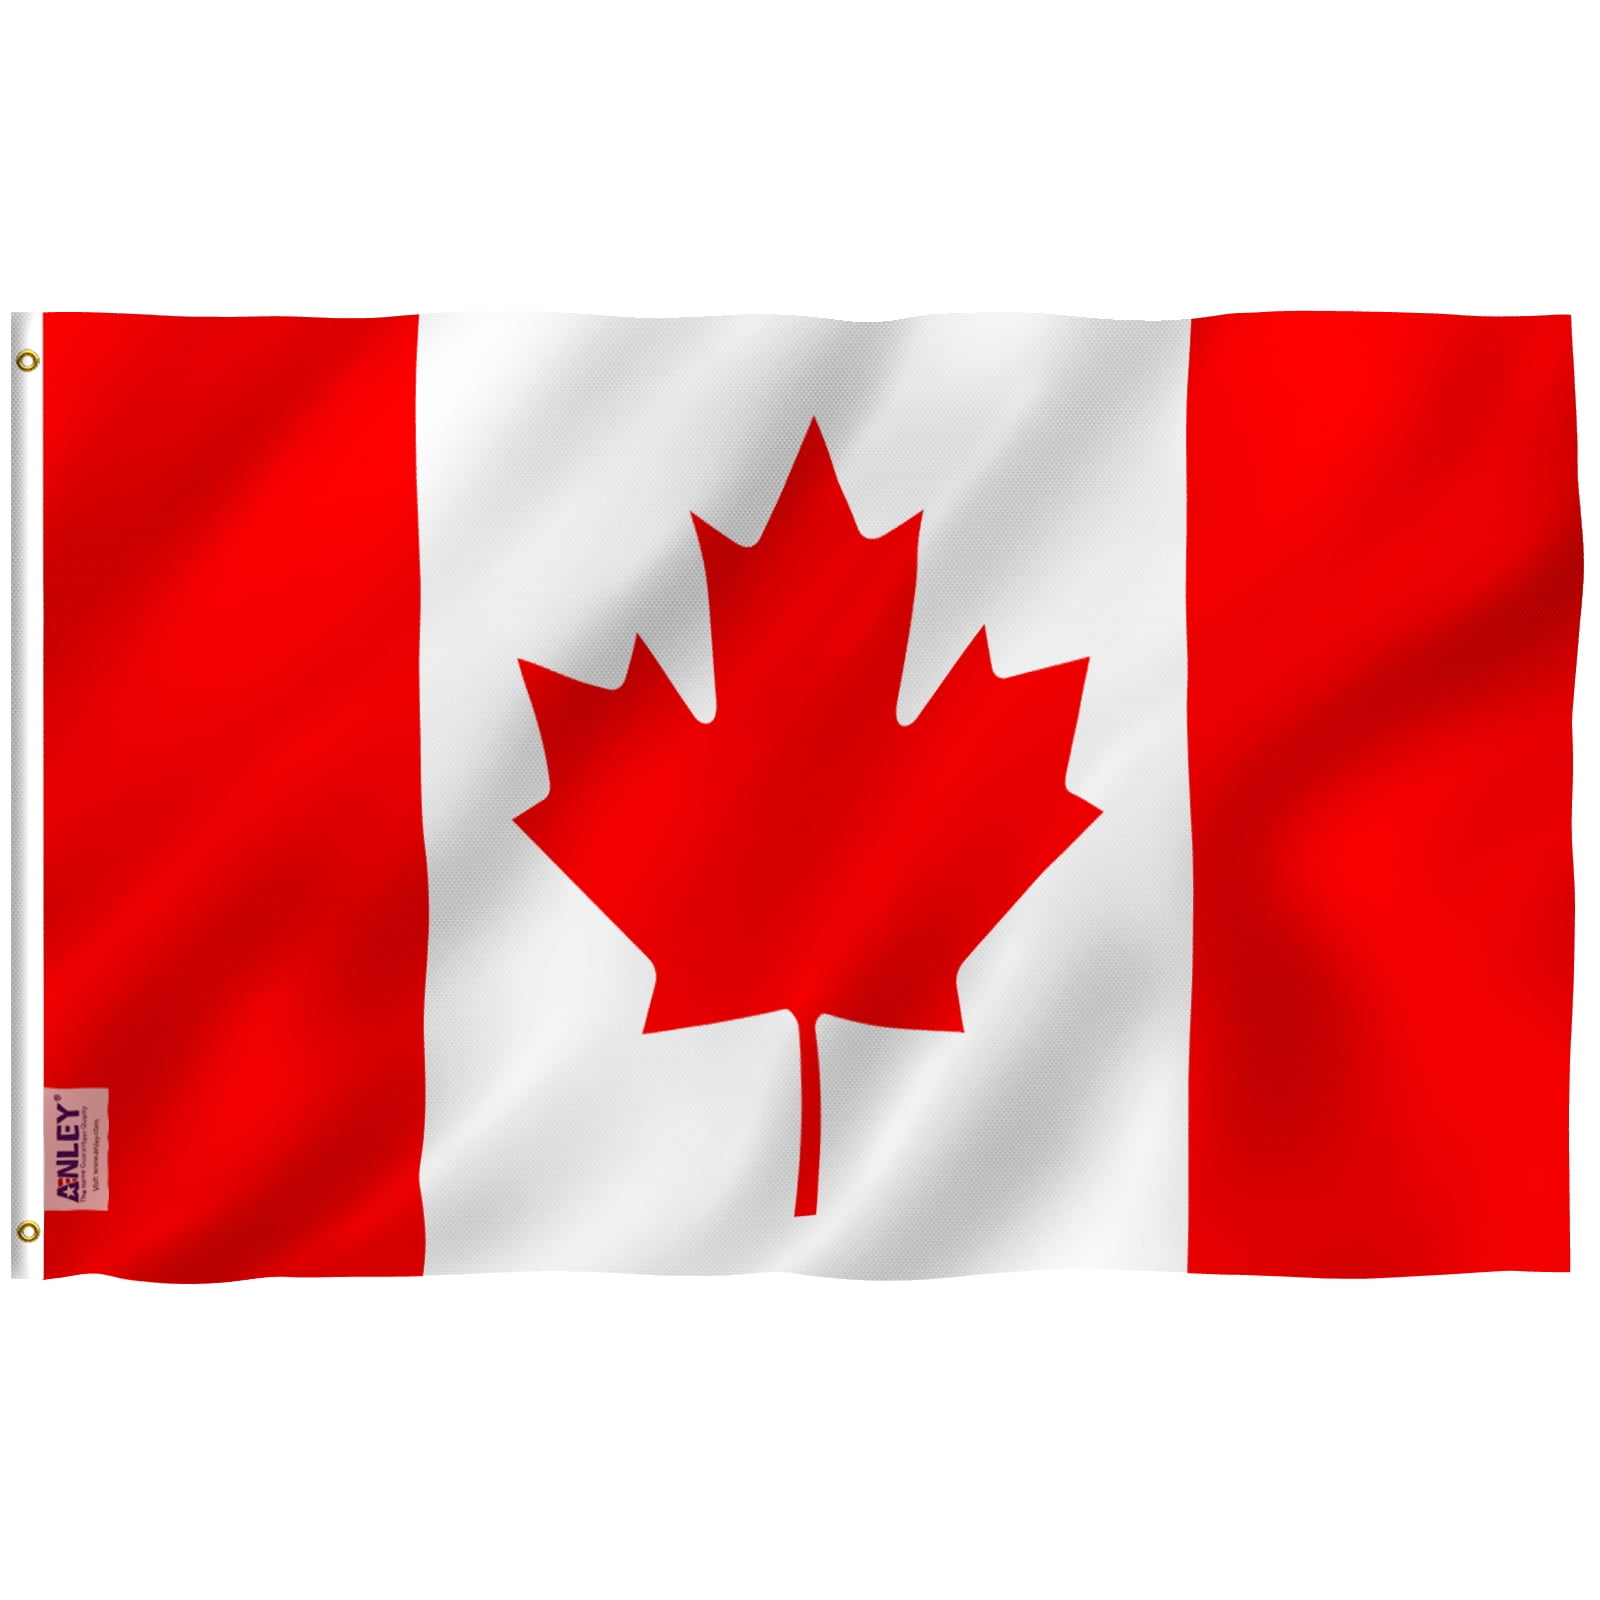 Description of the National Flag of Canada 